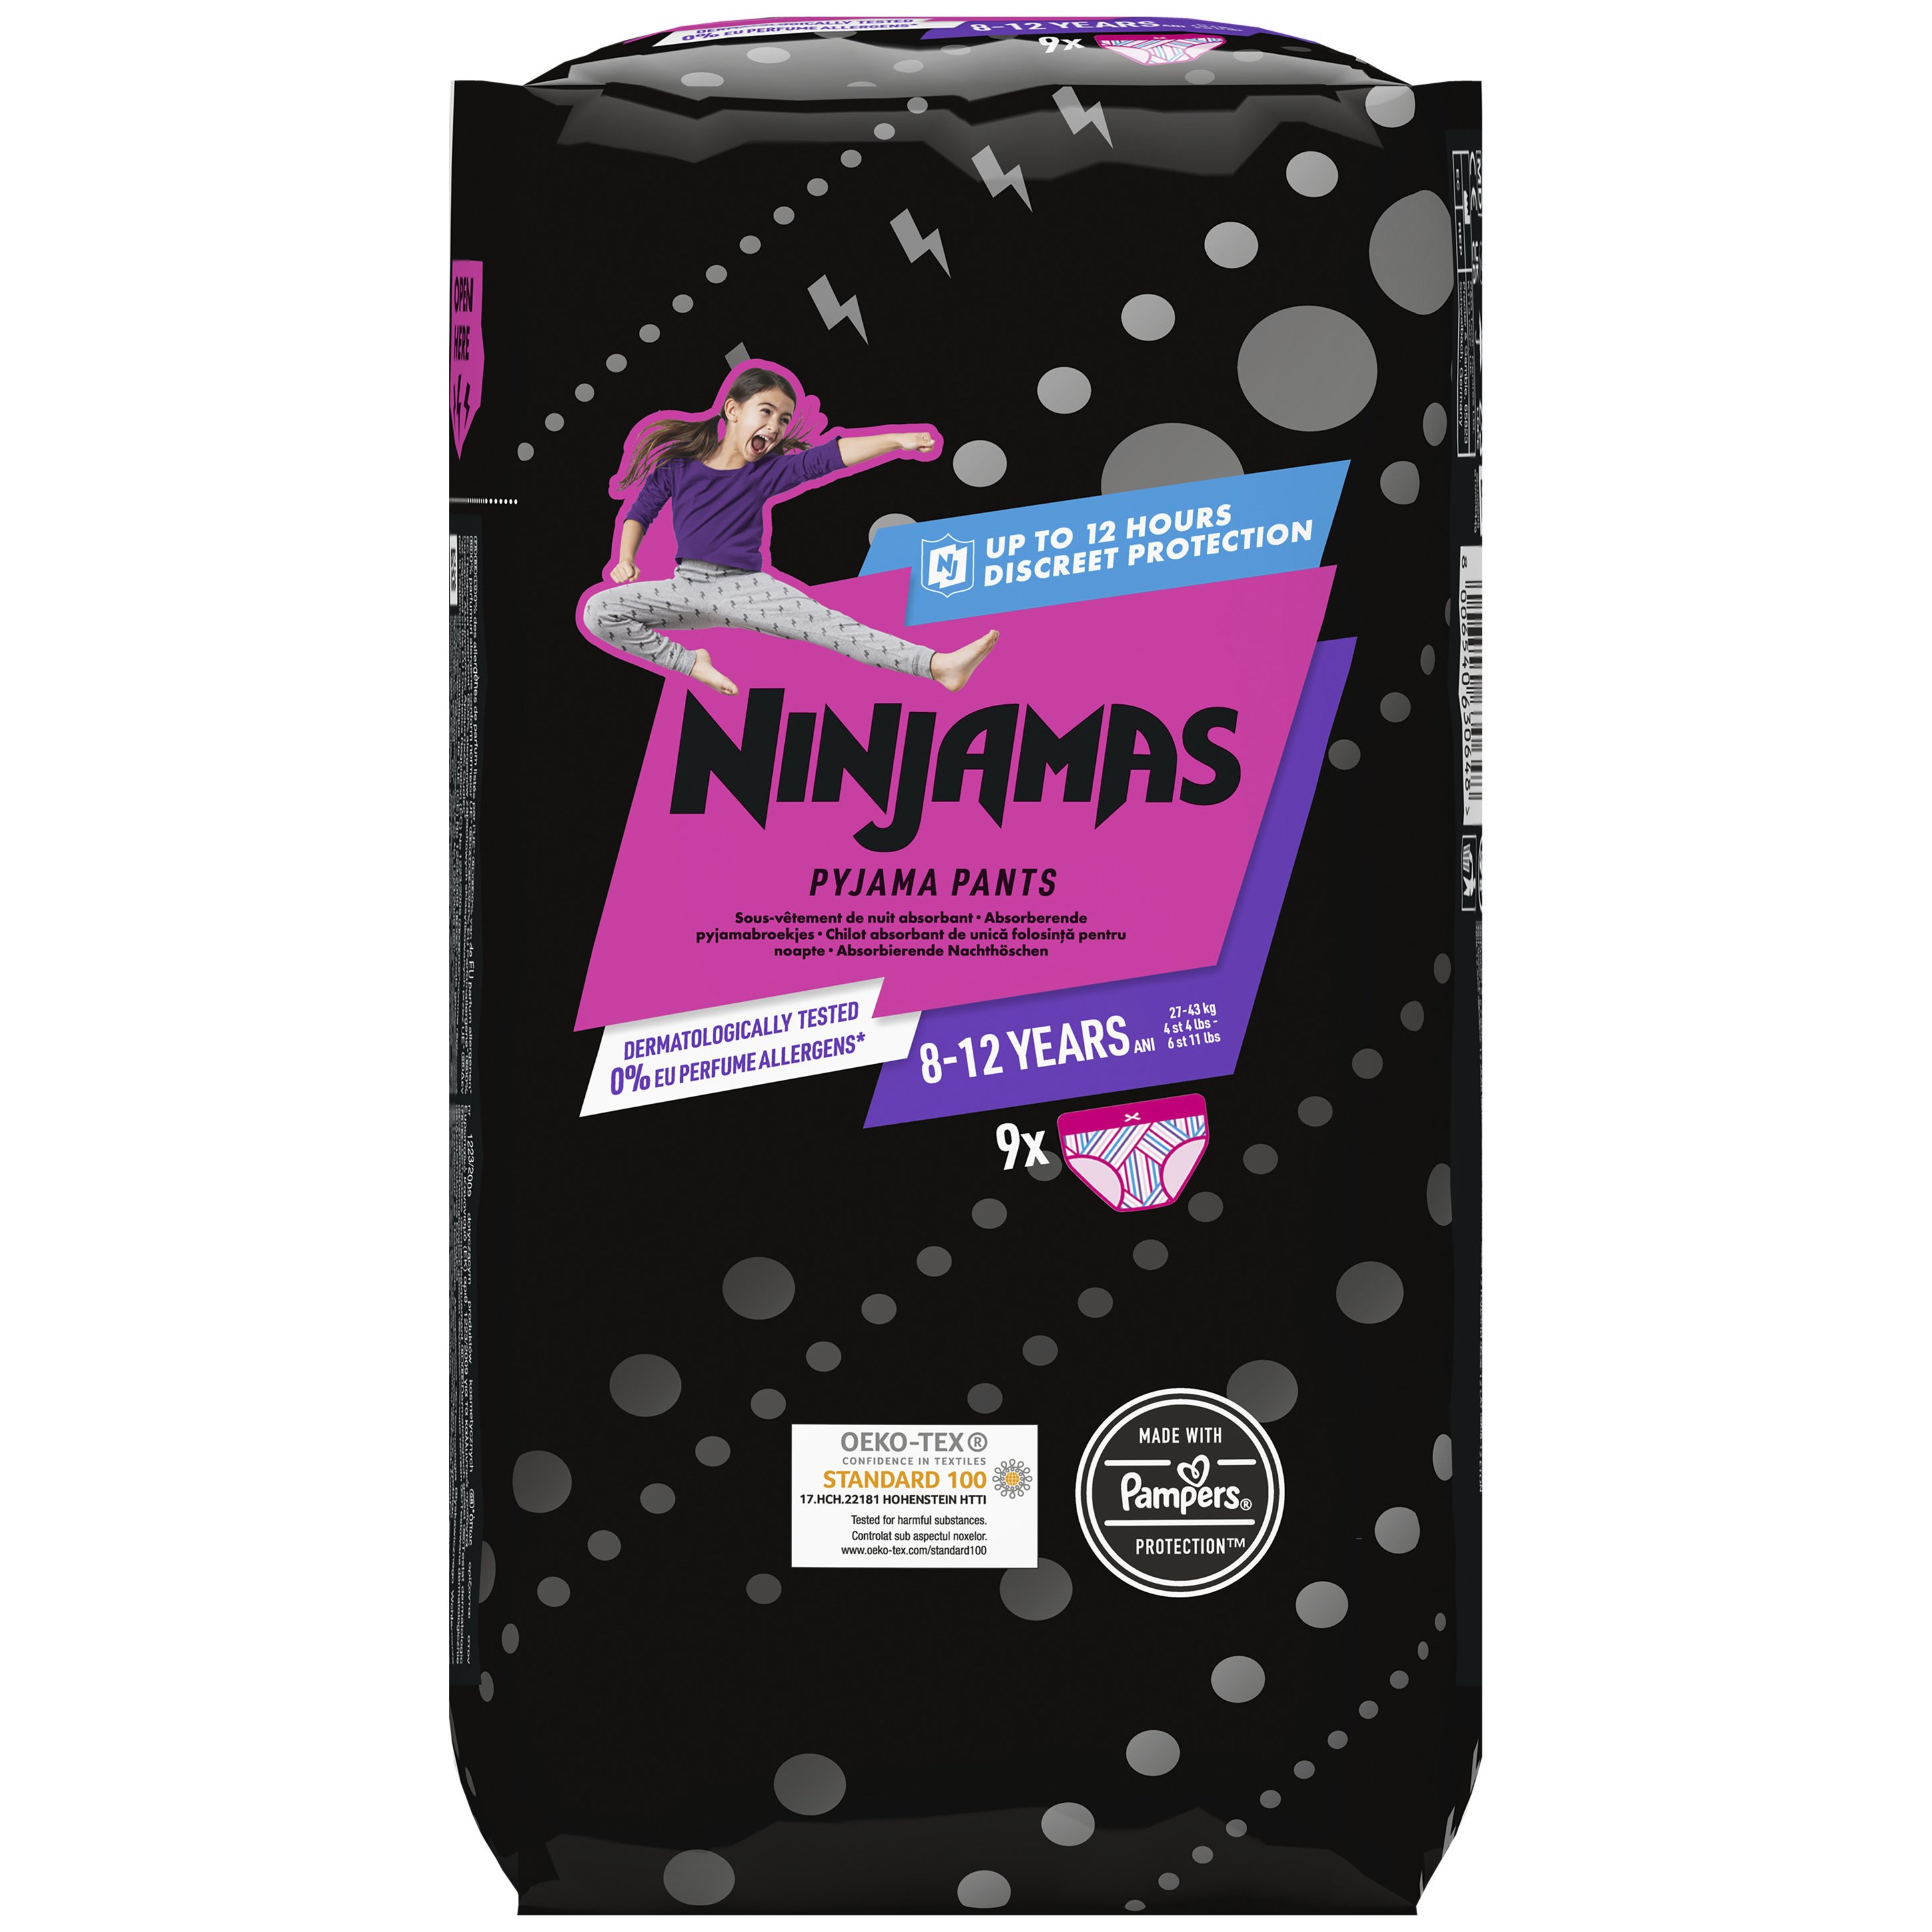 Ninjamas Pyjama Pants Girl 8-12 Years (27-43kg) Πάνες Βρακάκι Νυκτός για Κορίτσια από 8-12 Ετών 9 Τεμάχια